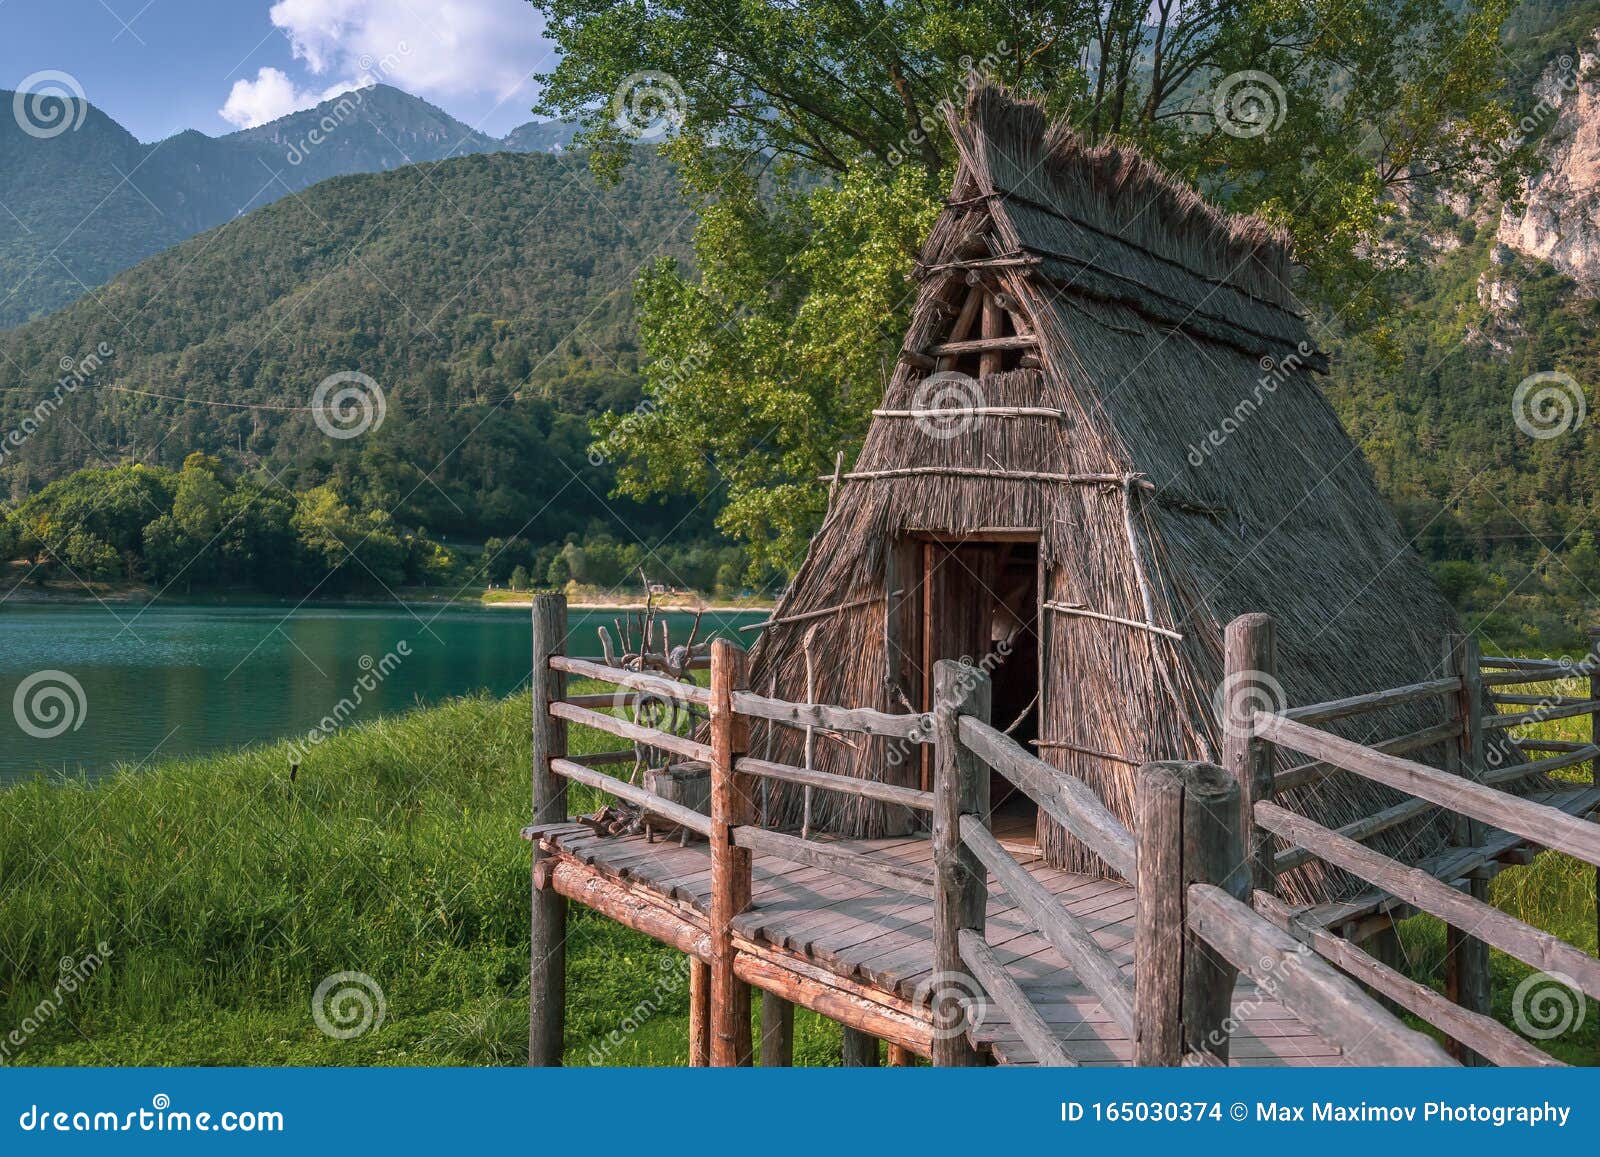 molina di ledro, italy - prehistoric pile dwellings around the alps unesco world heritage